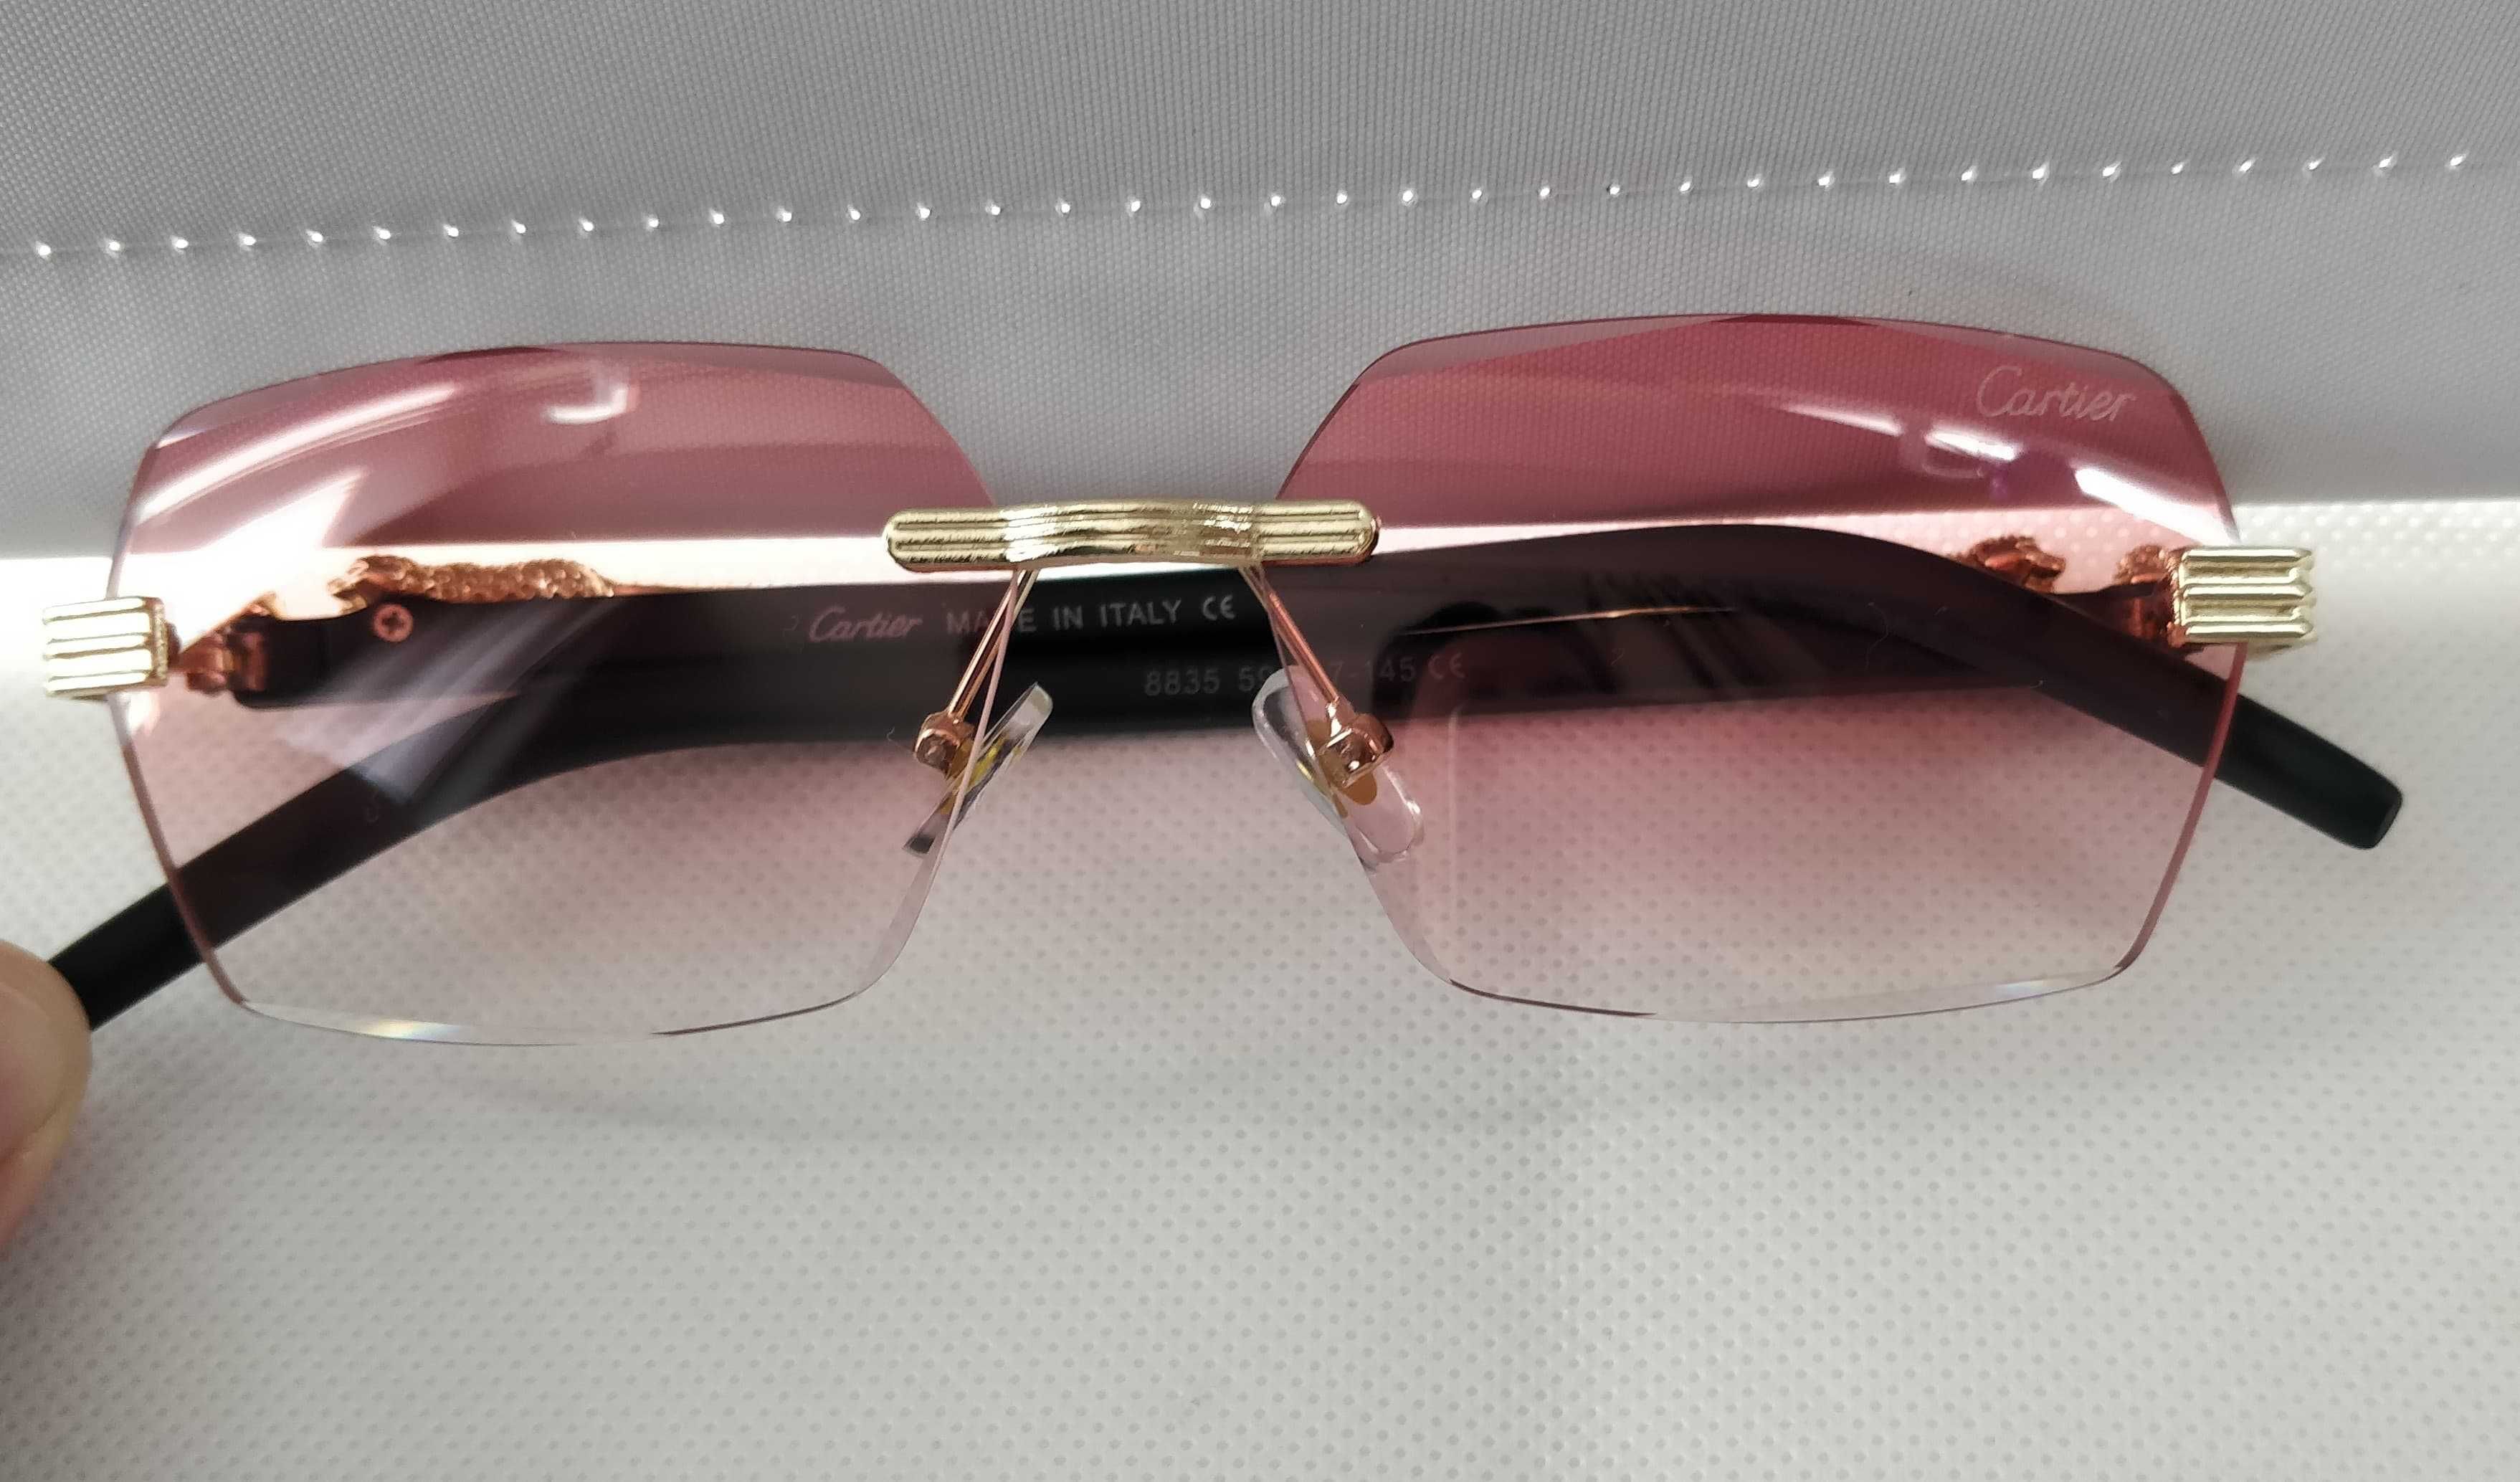 Ochelari de soare Cartier model 5, lentile roz, rama neagra